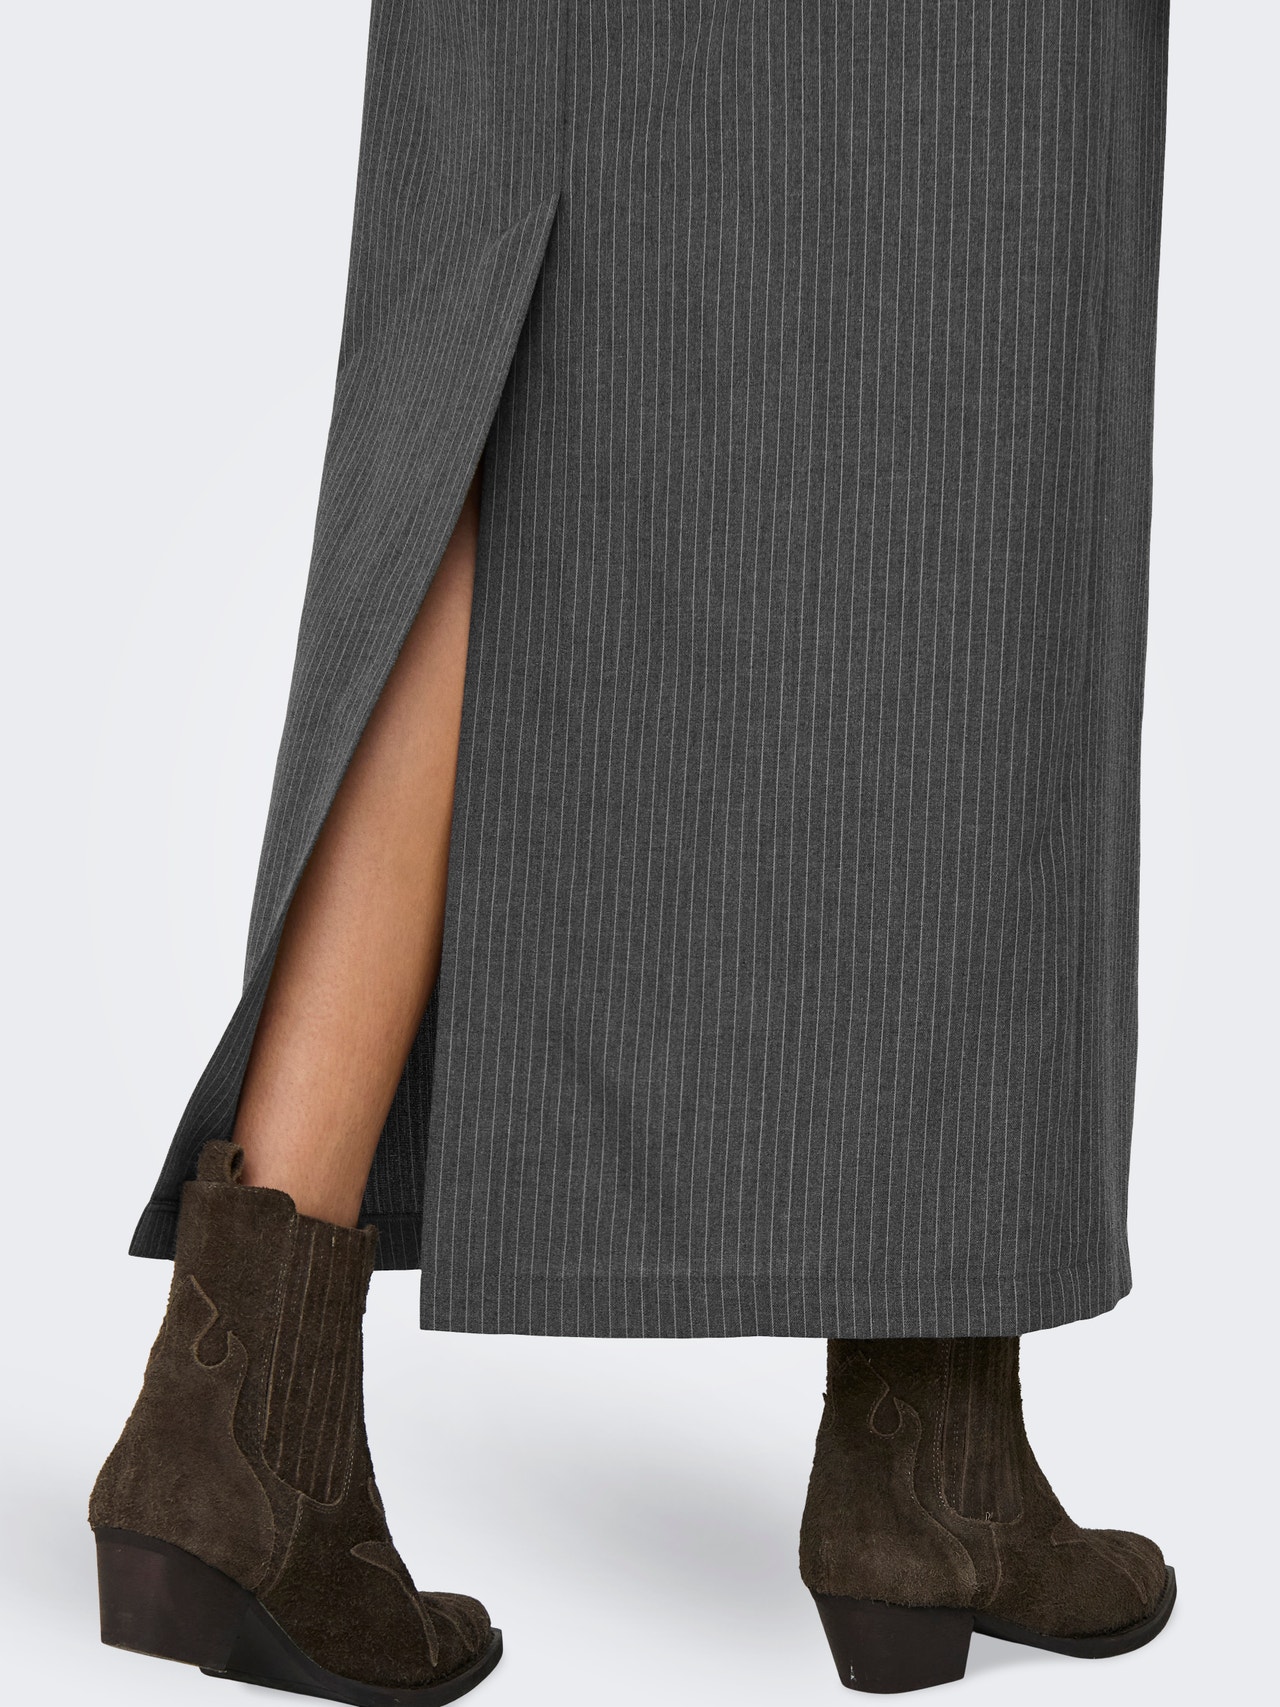 ONLY High waist Long skirt -Dark Grey Melange - 15336291